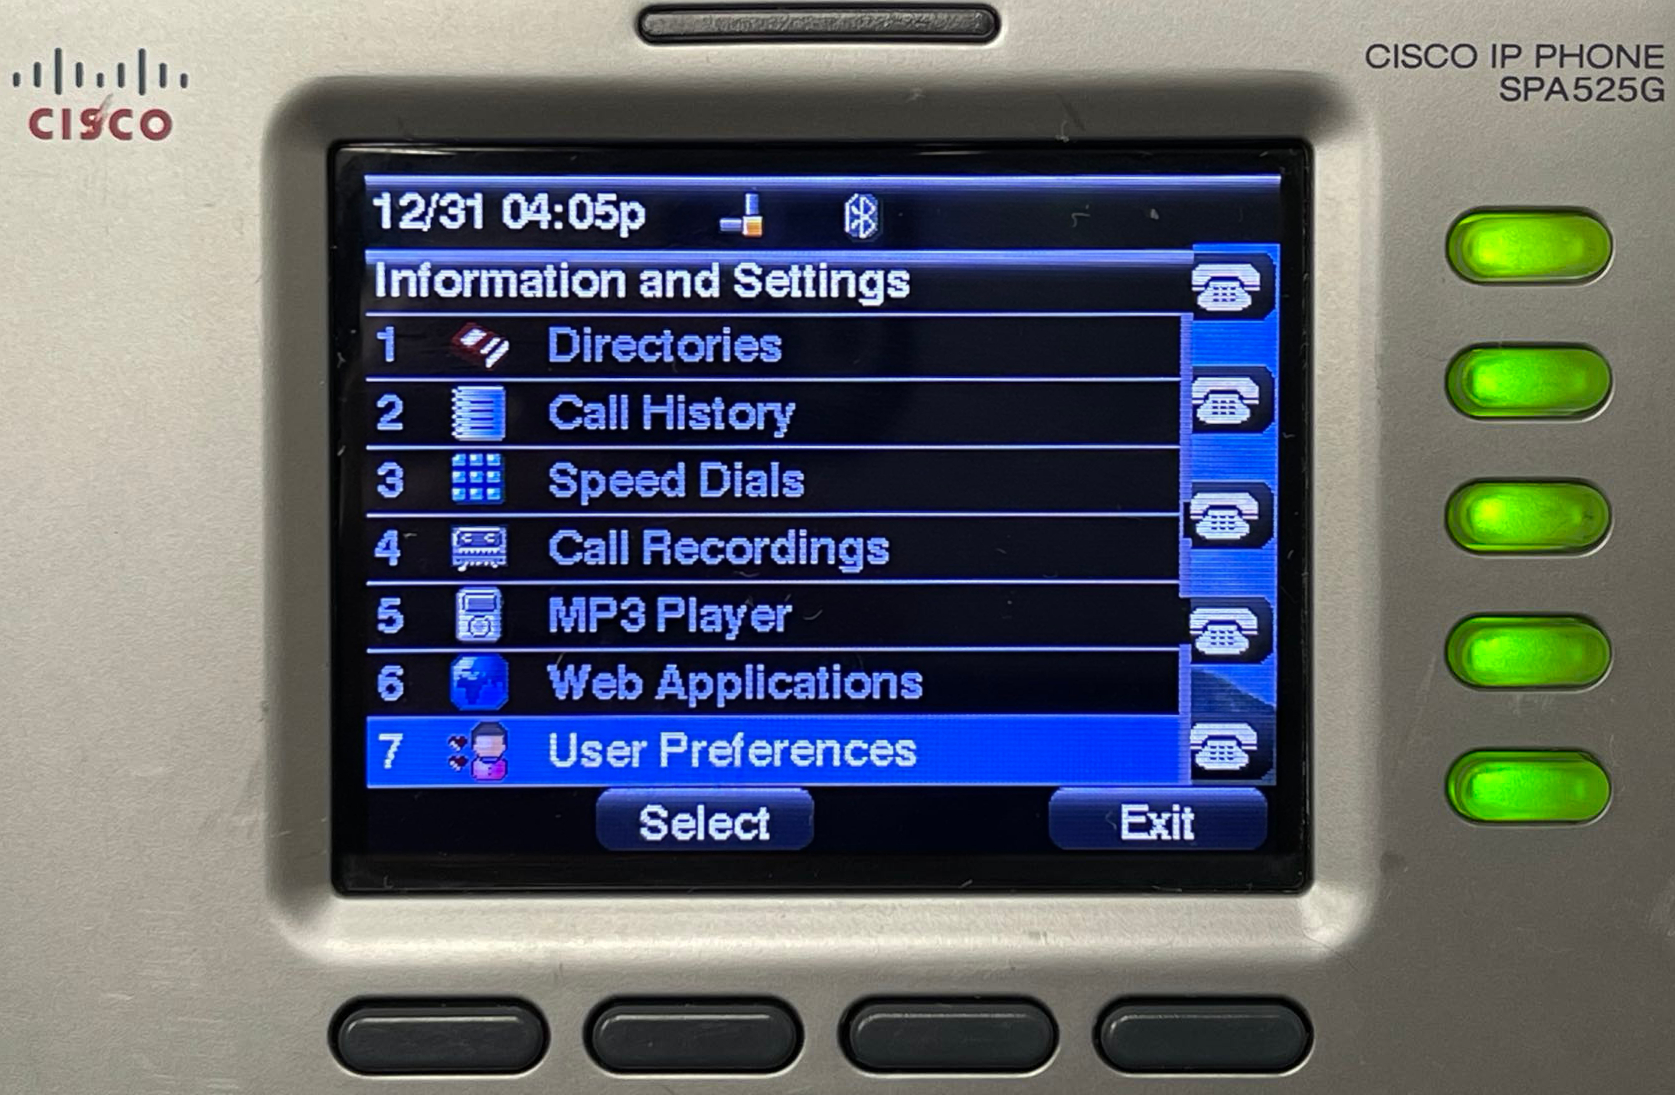 Cisco SPA 525G phone User Preferences